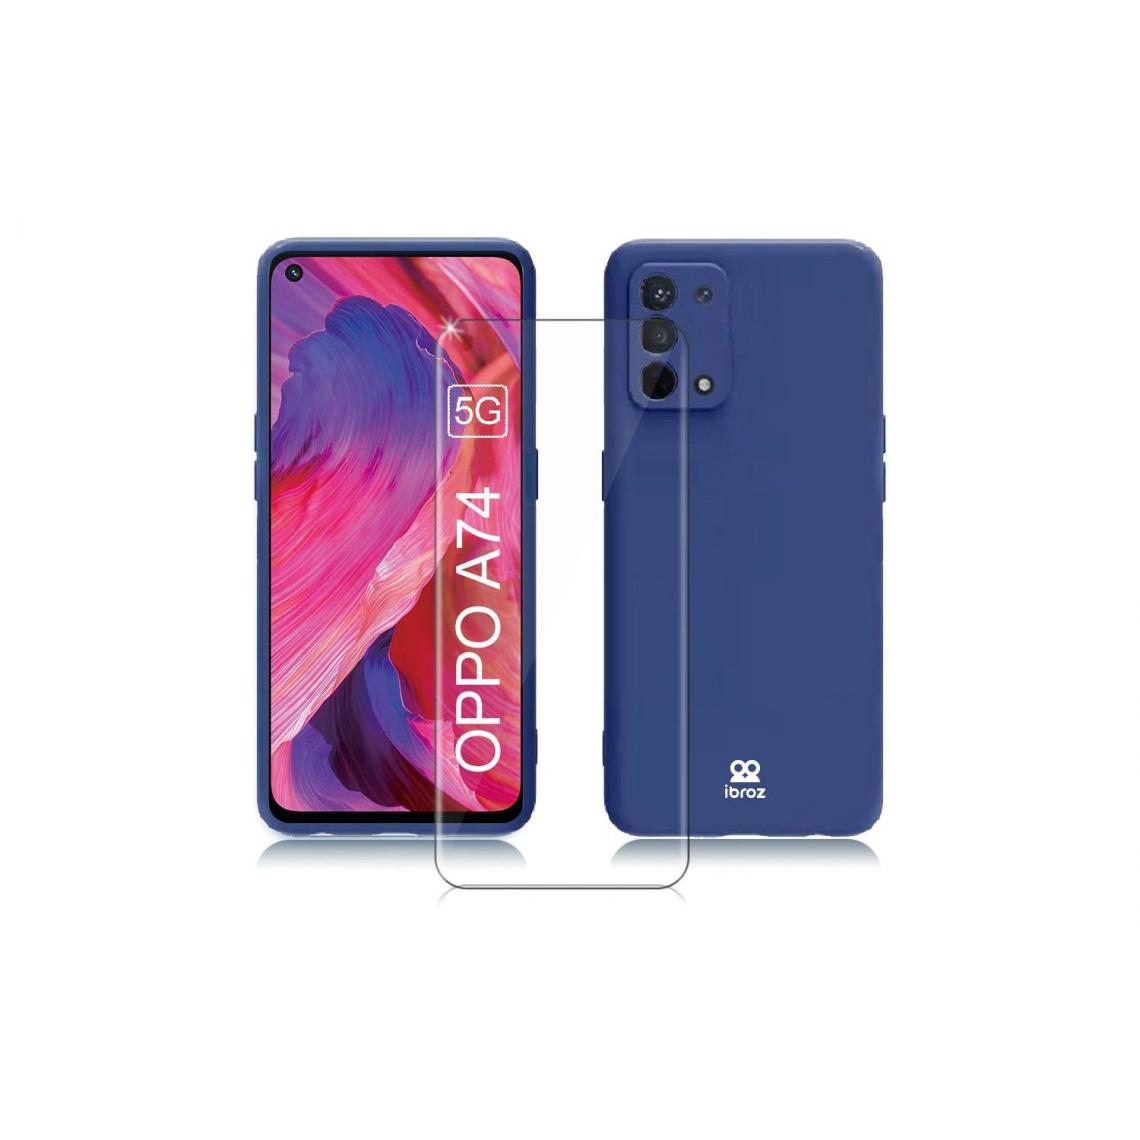 Ibroz - Ibroz Coque silicone bleue + Verre - Autres accessoires smartphone